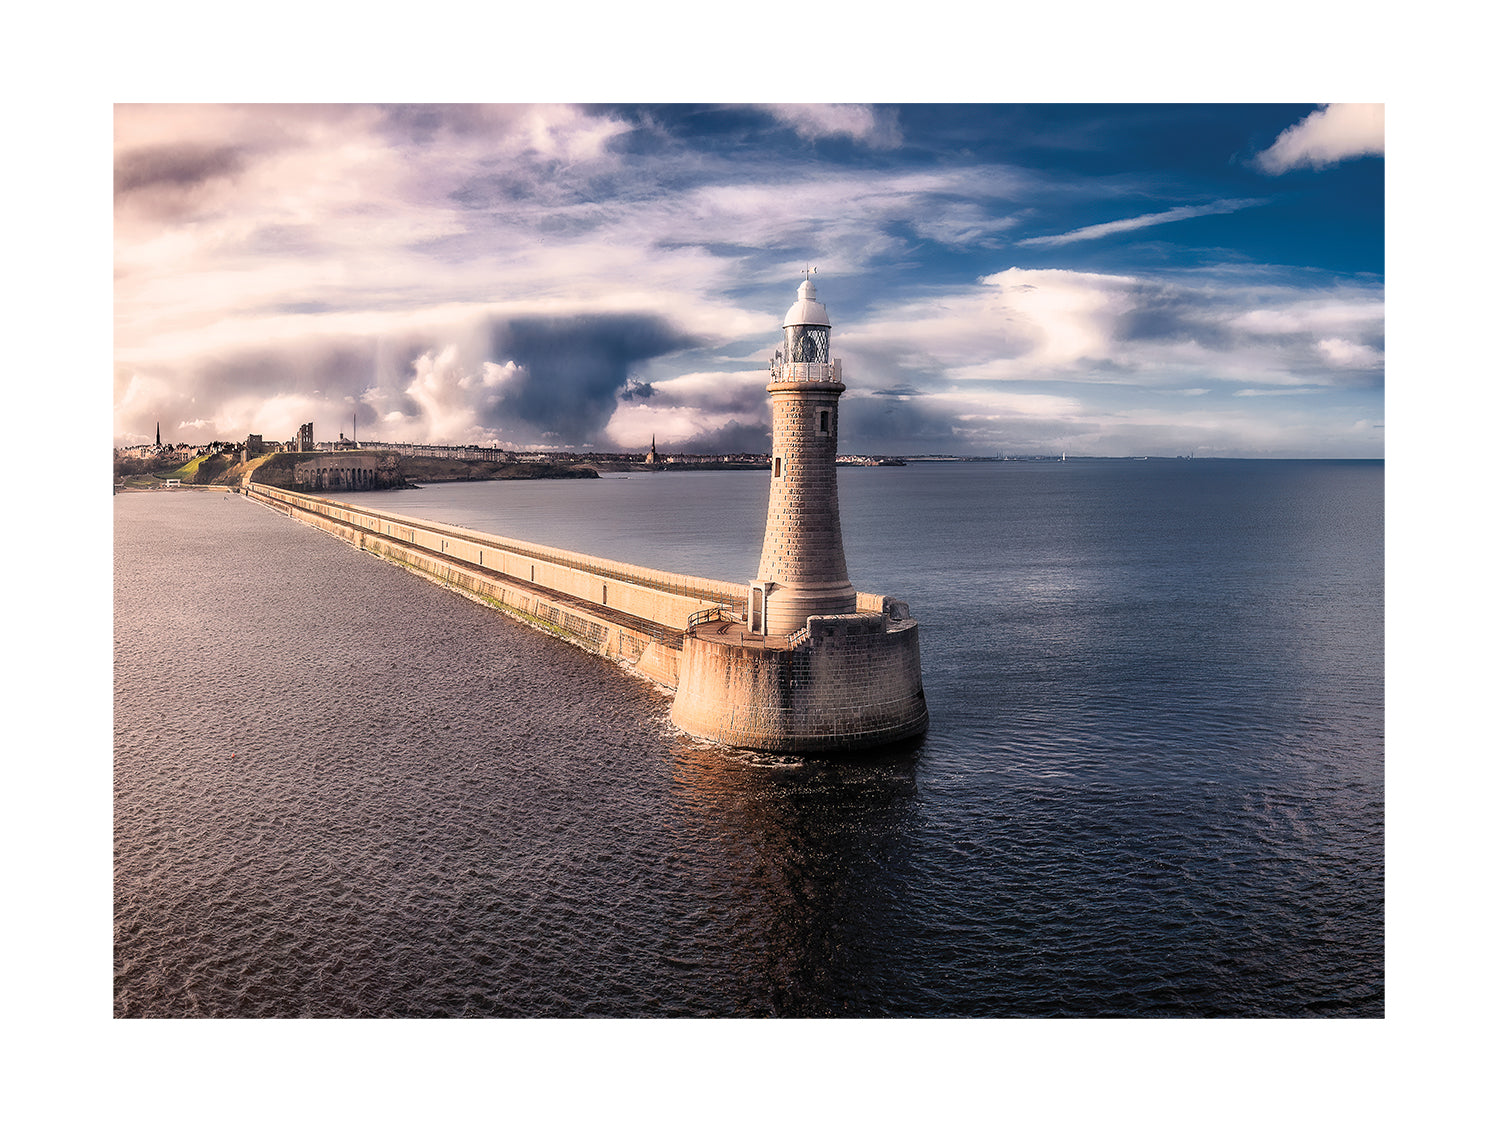 Tynemouth Lighthouse's "Serenity"